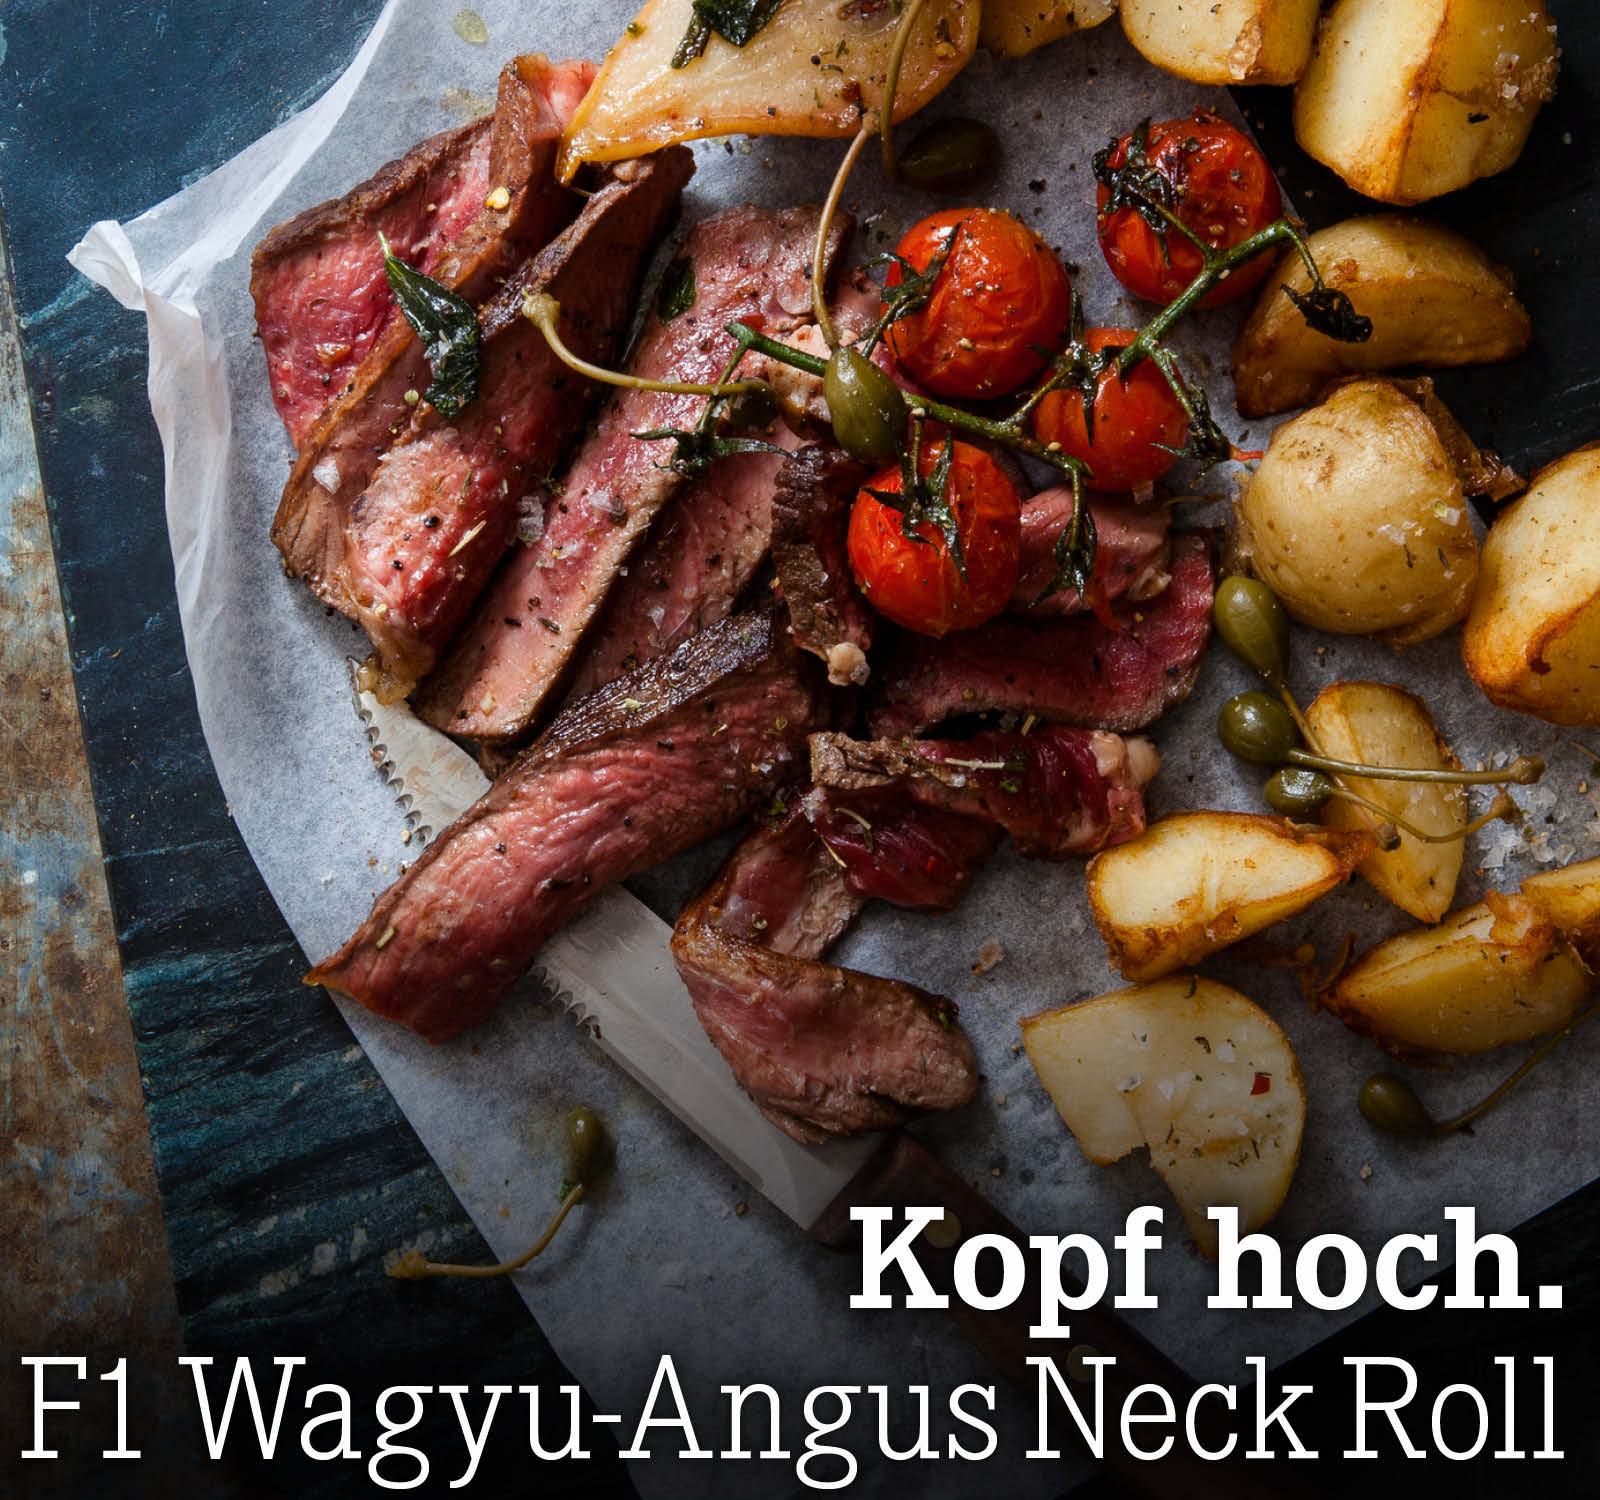 F1 Wagyu-Angus Neck Roll